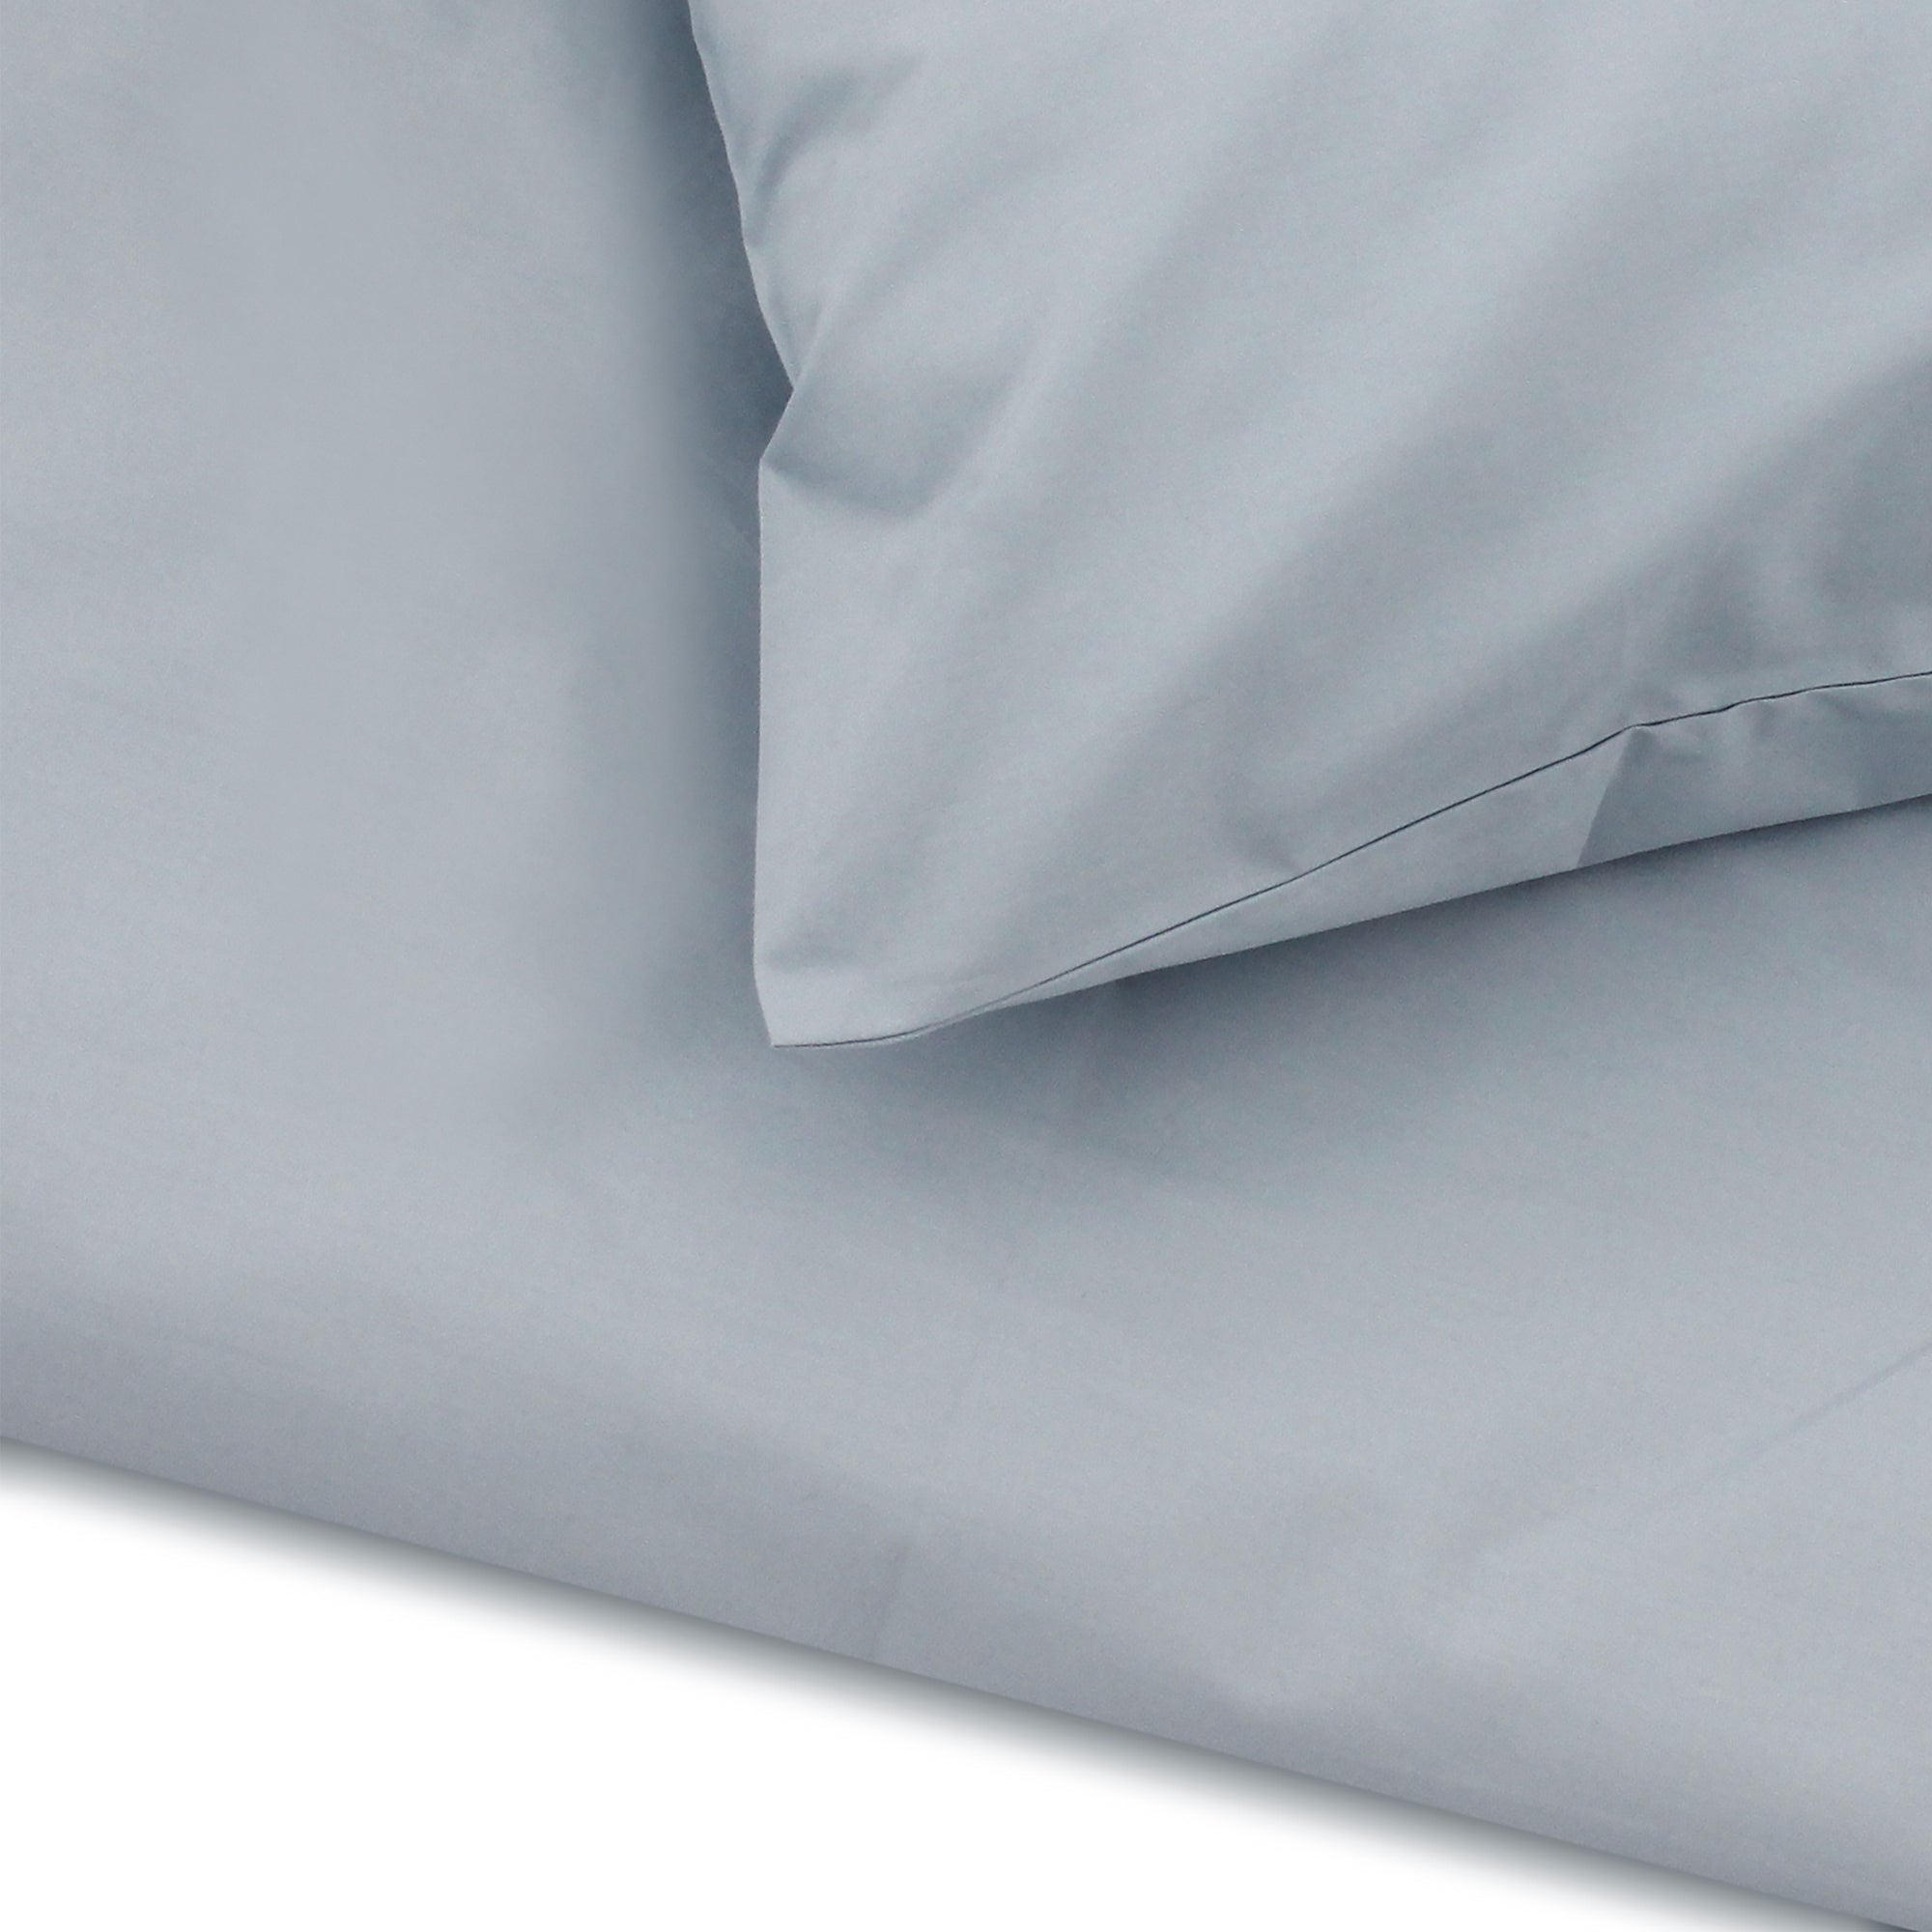 Powder Blue Duvet Cover + Pillowcases (350 TC)